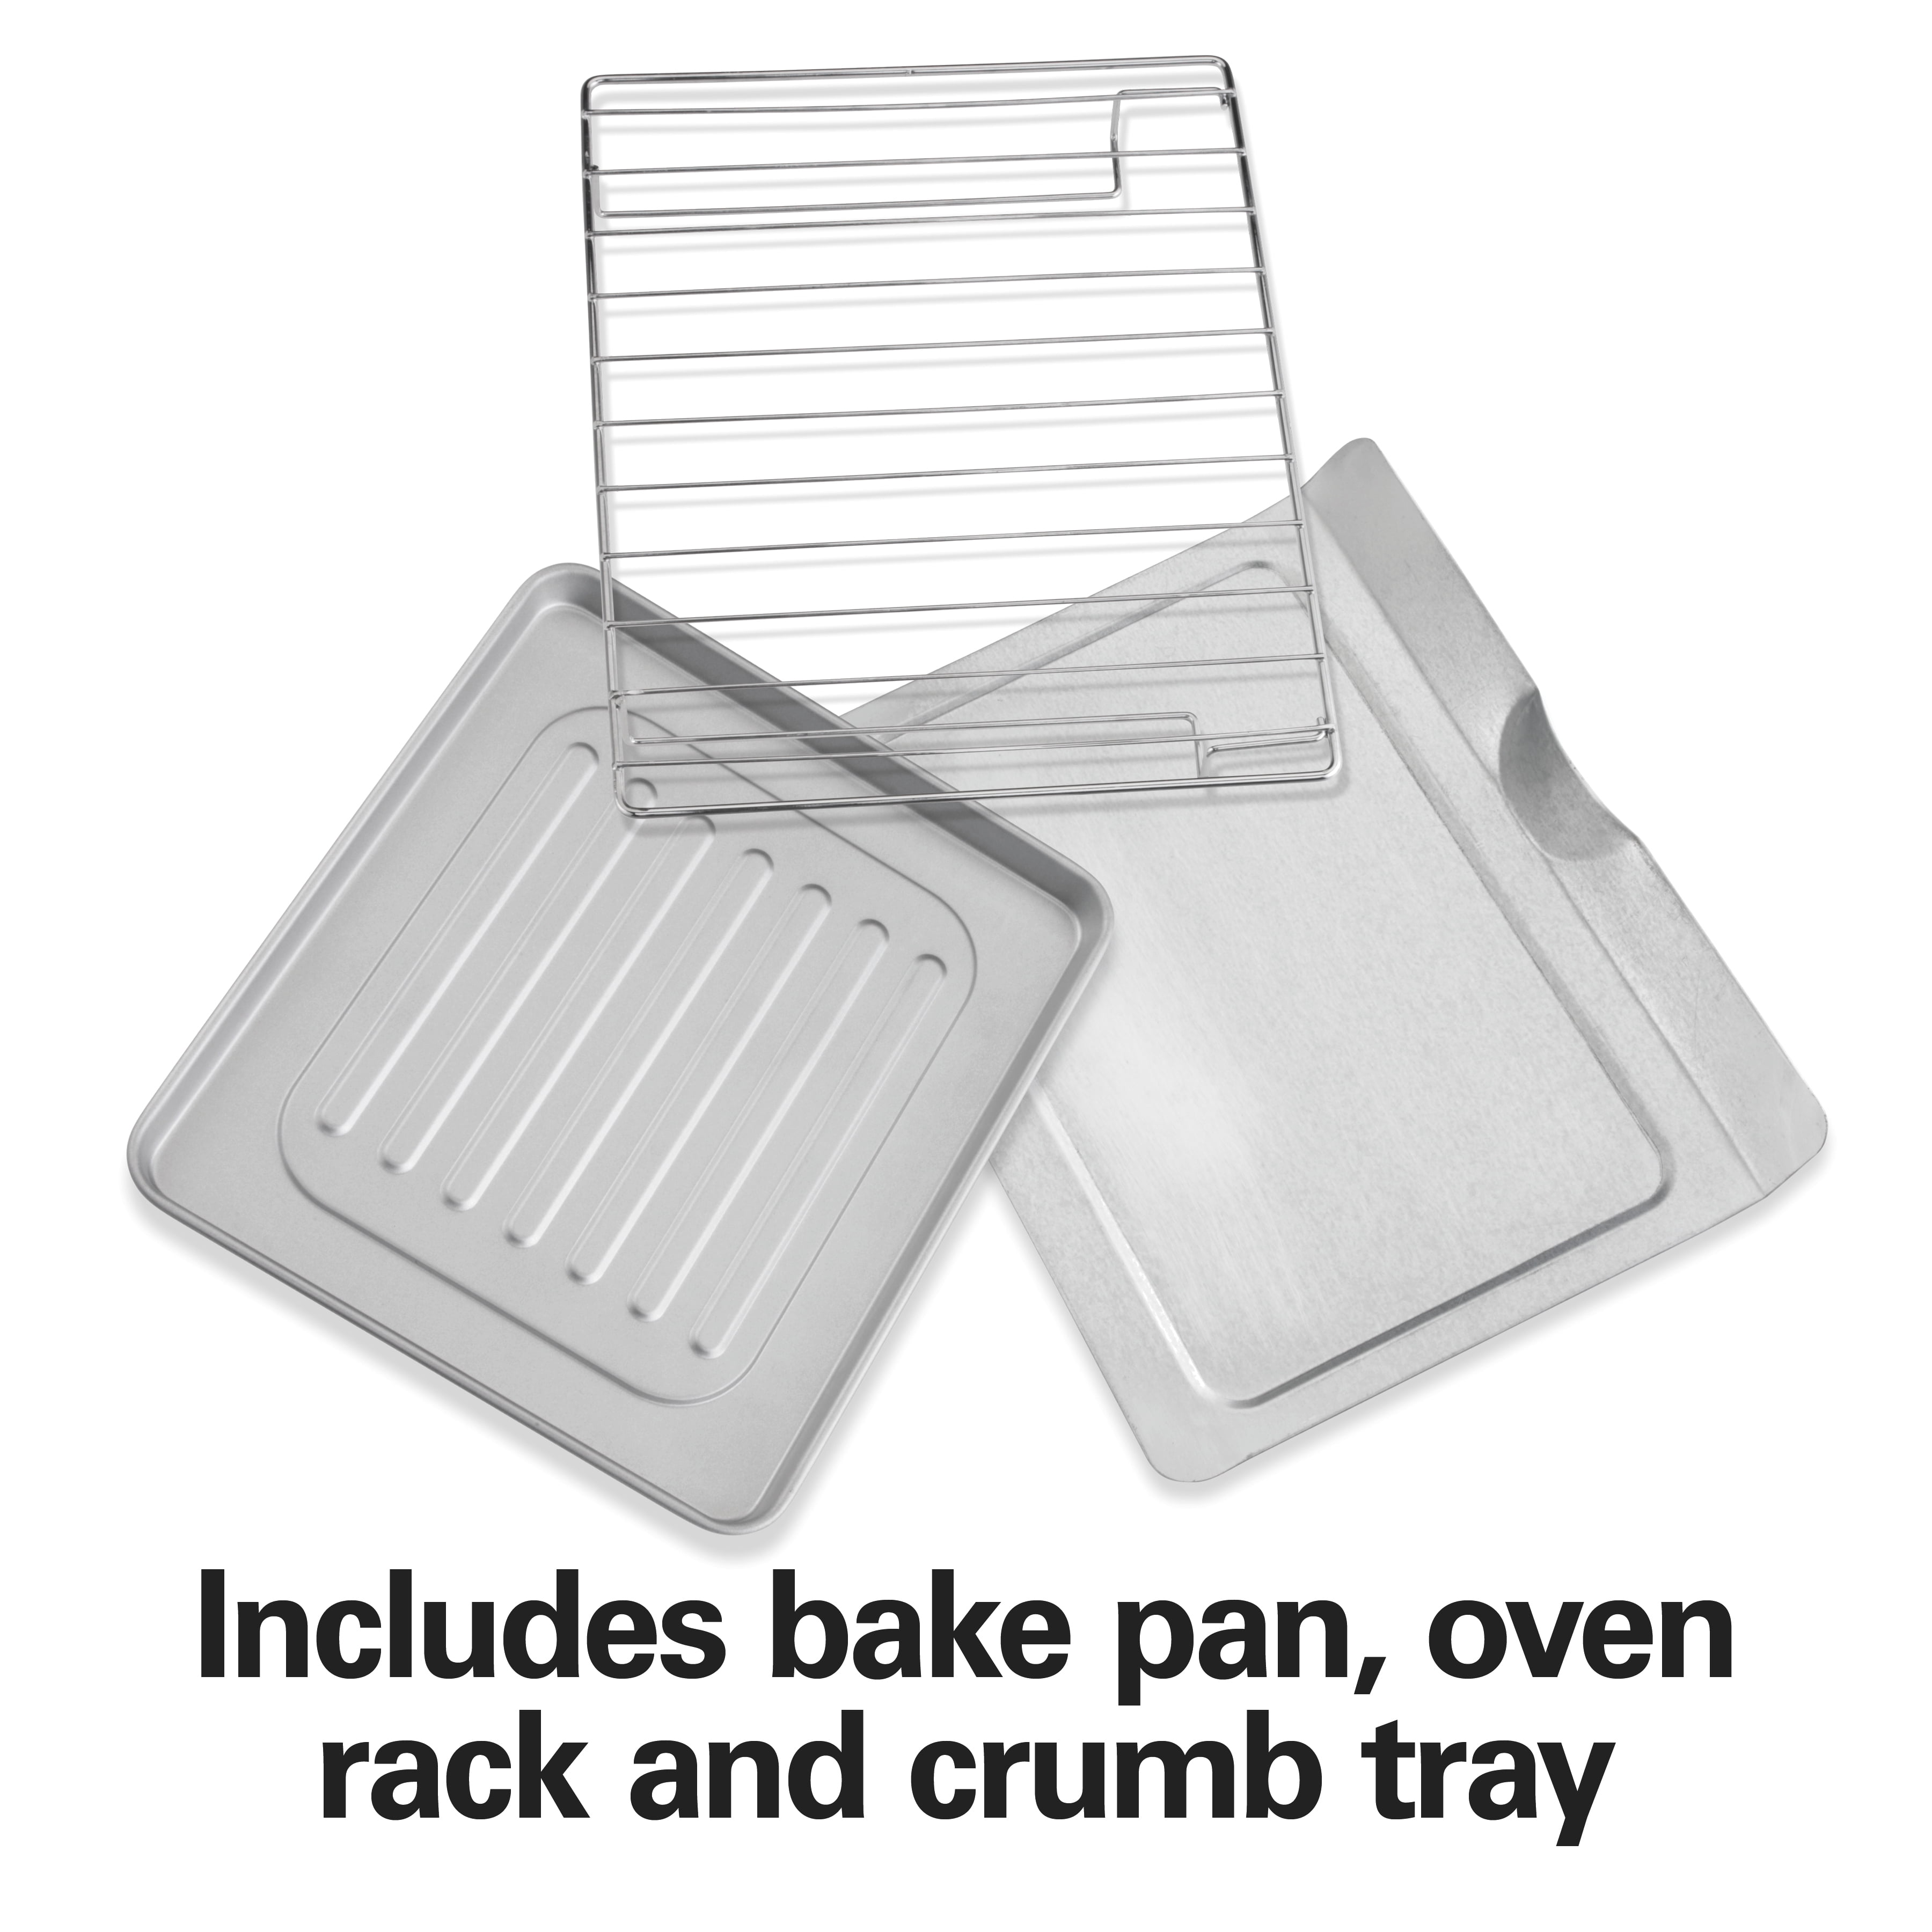 Hamilton Beach Easy Reach 4-Slice Toaster Oven - Gray, 1 ct